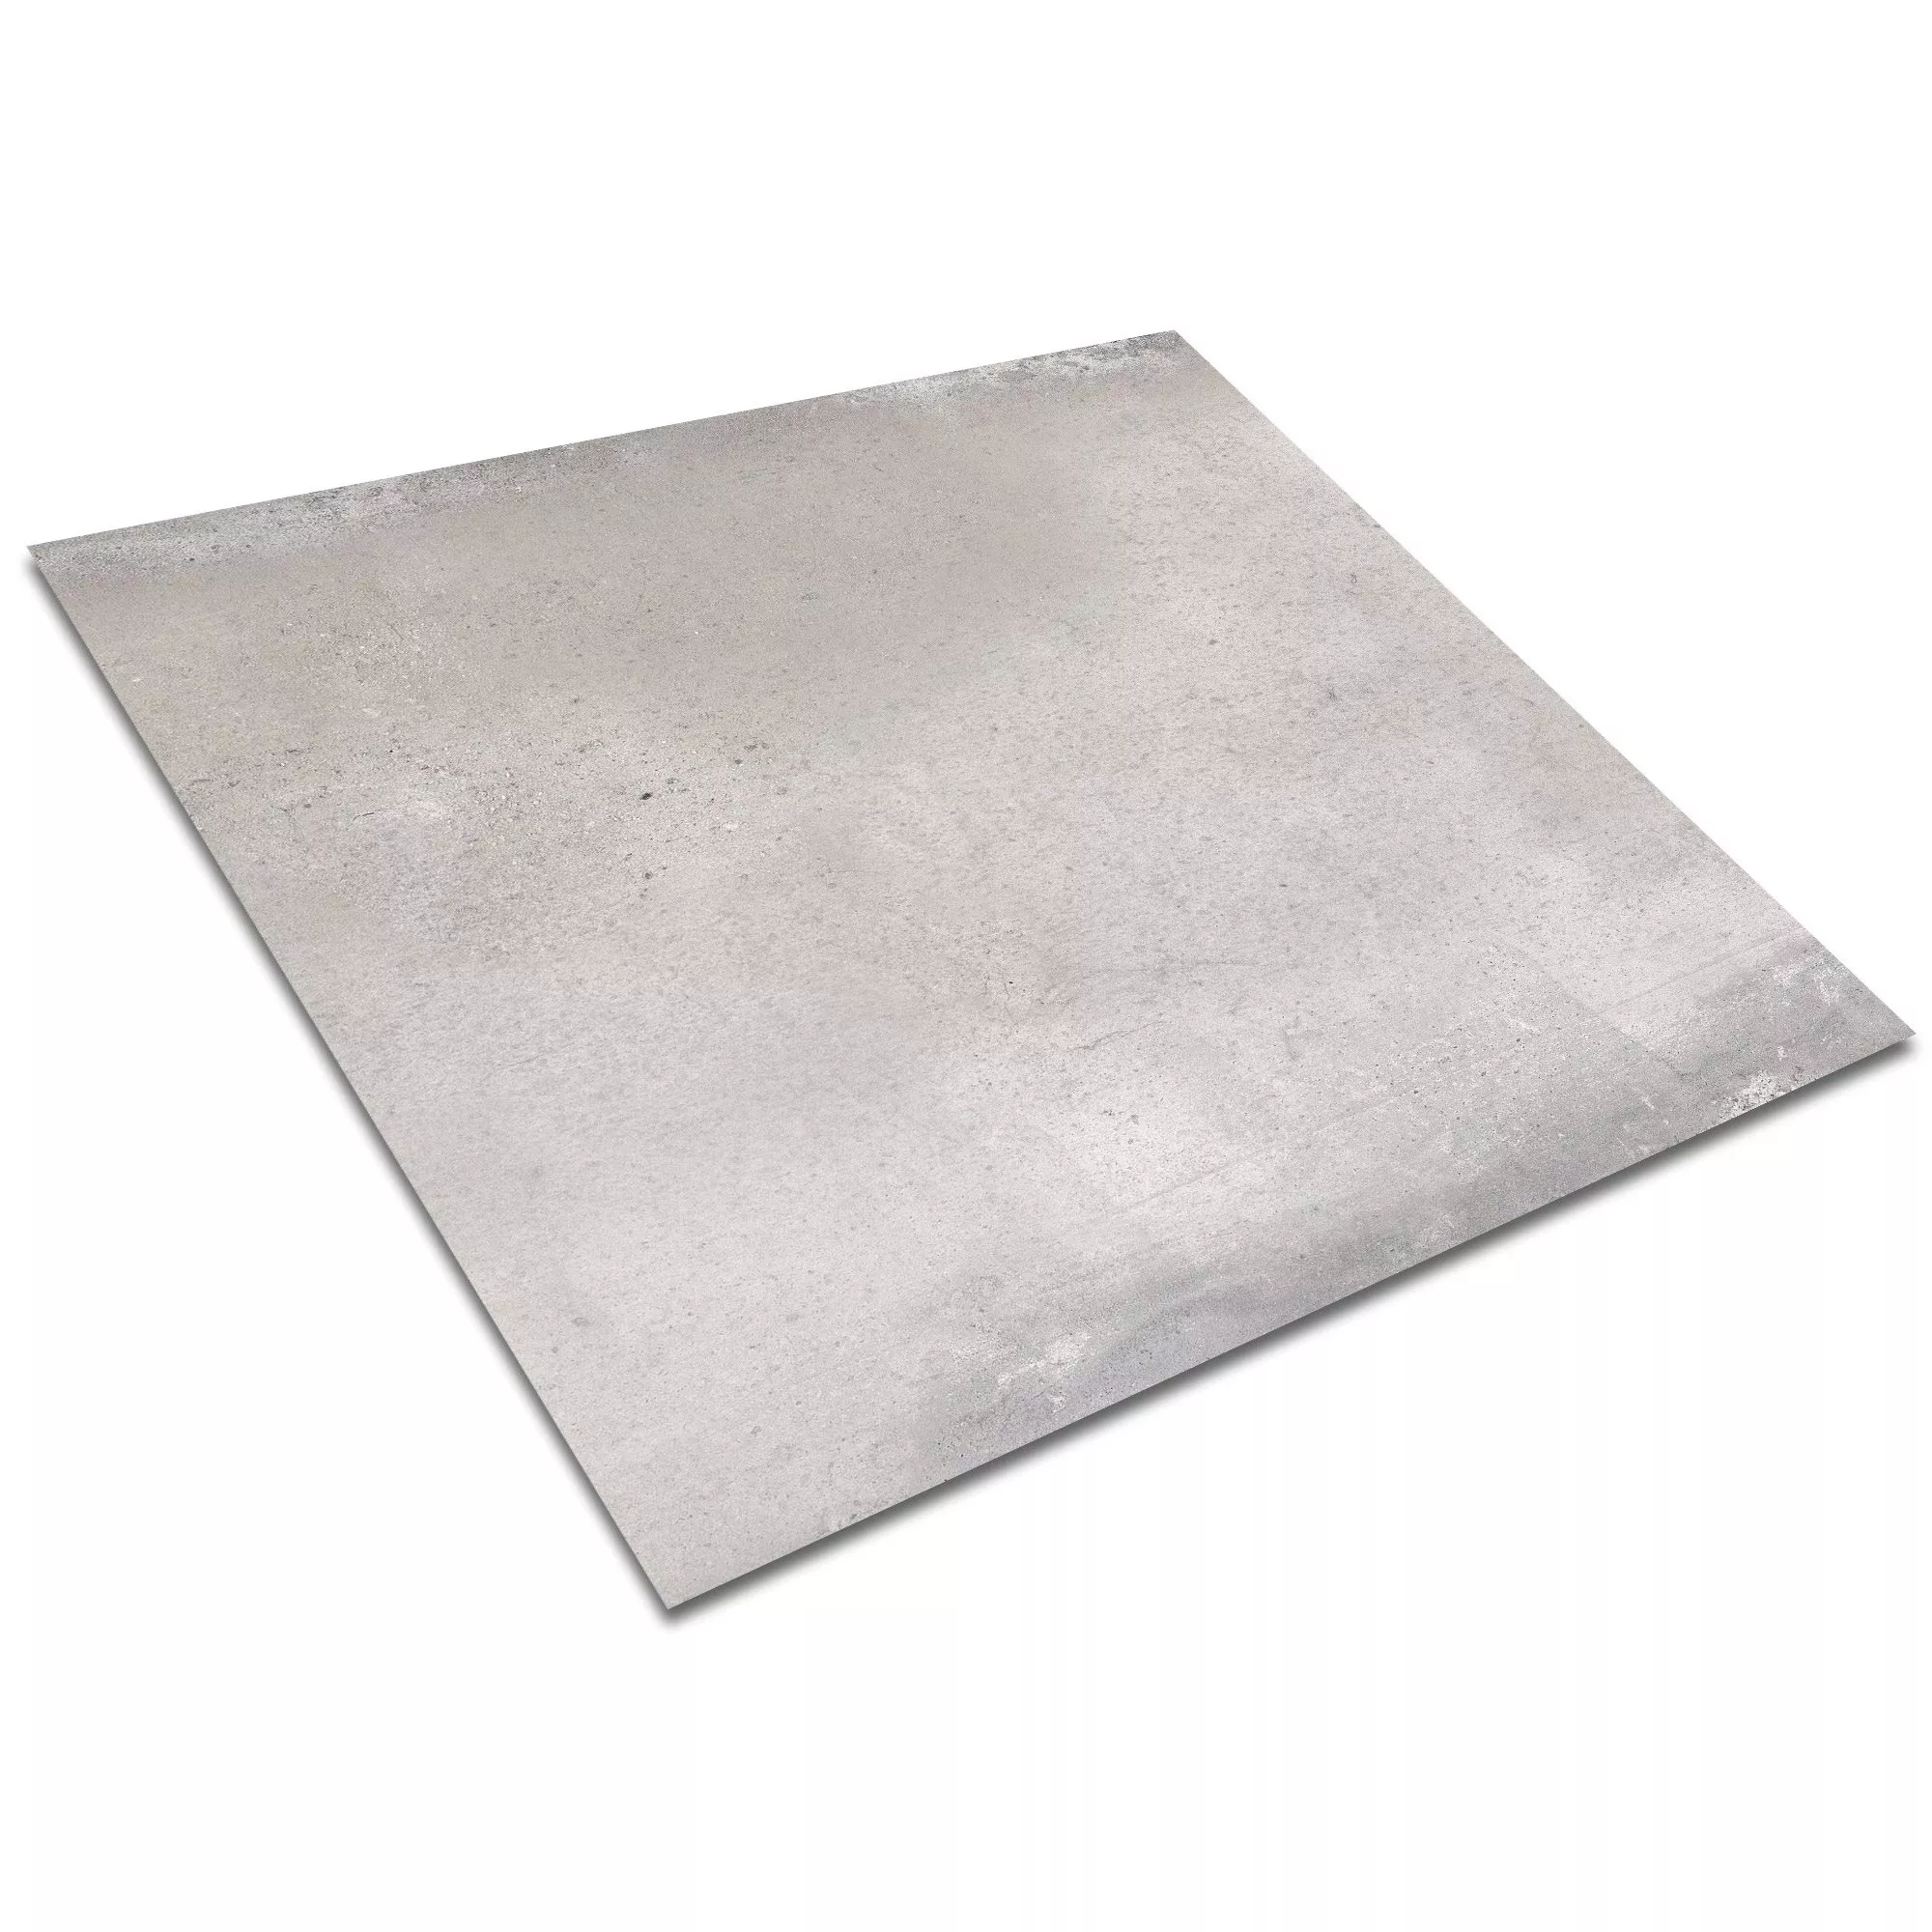 Sample Vloertegels Cement Optic Maryland Grijs 60x60cm